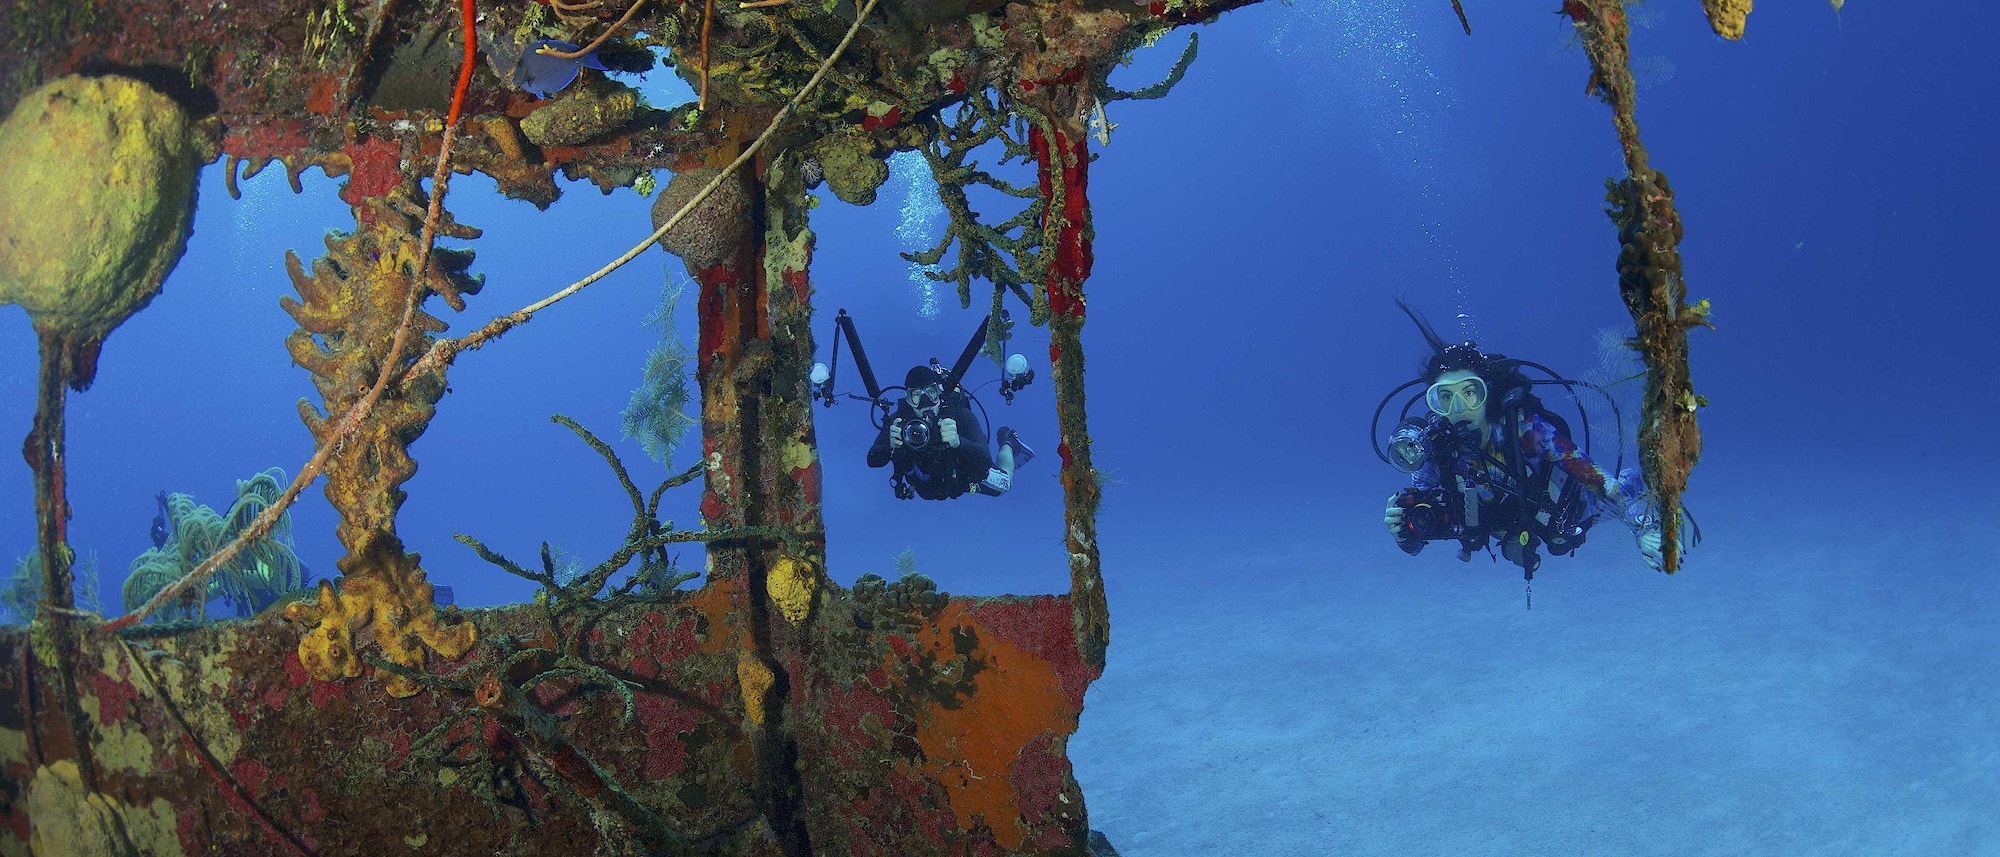 Cayman Diving